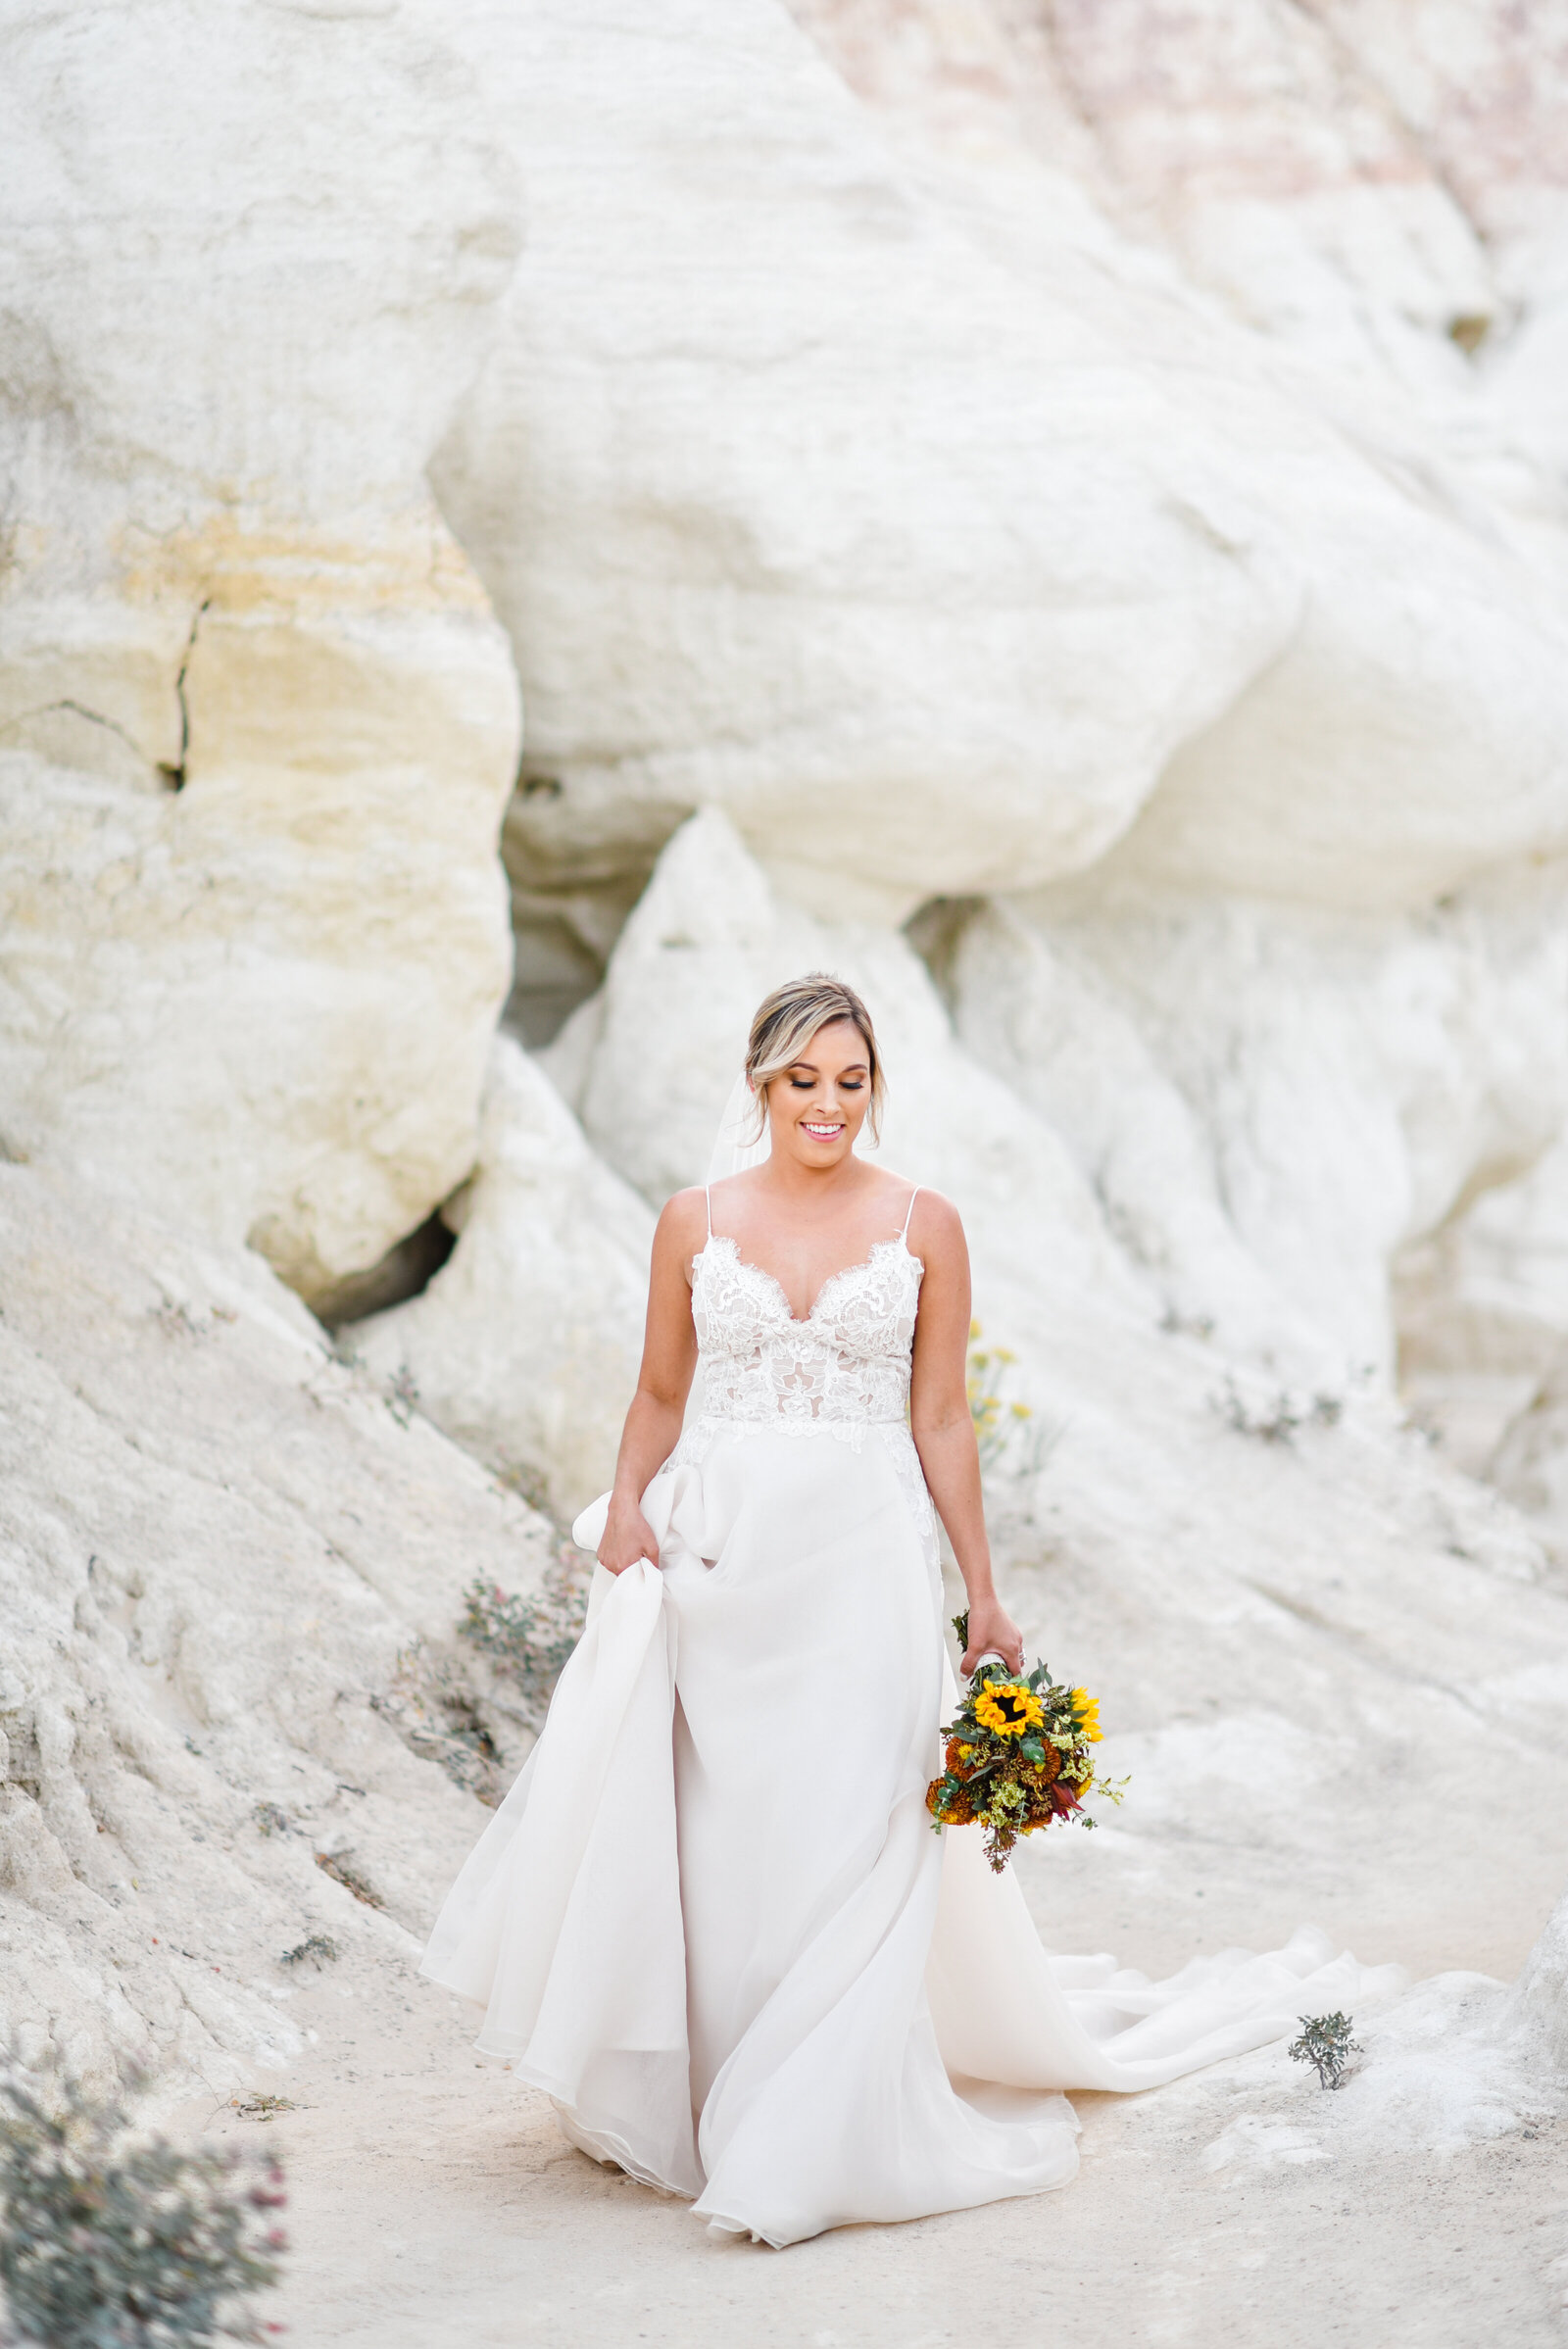 Colorado Wedding Photographer captures bride walking through paint mines in dress